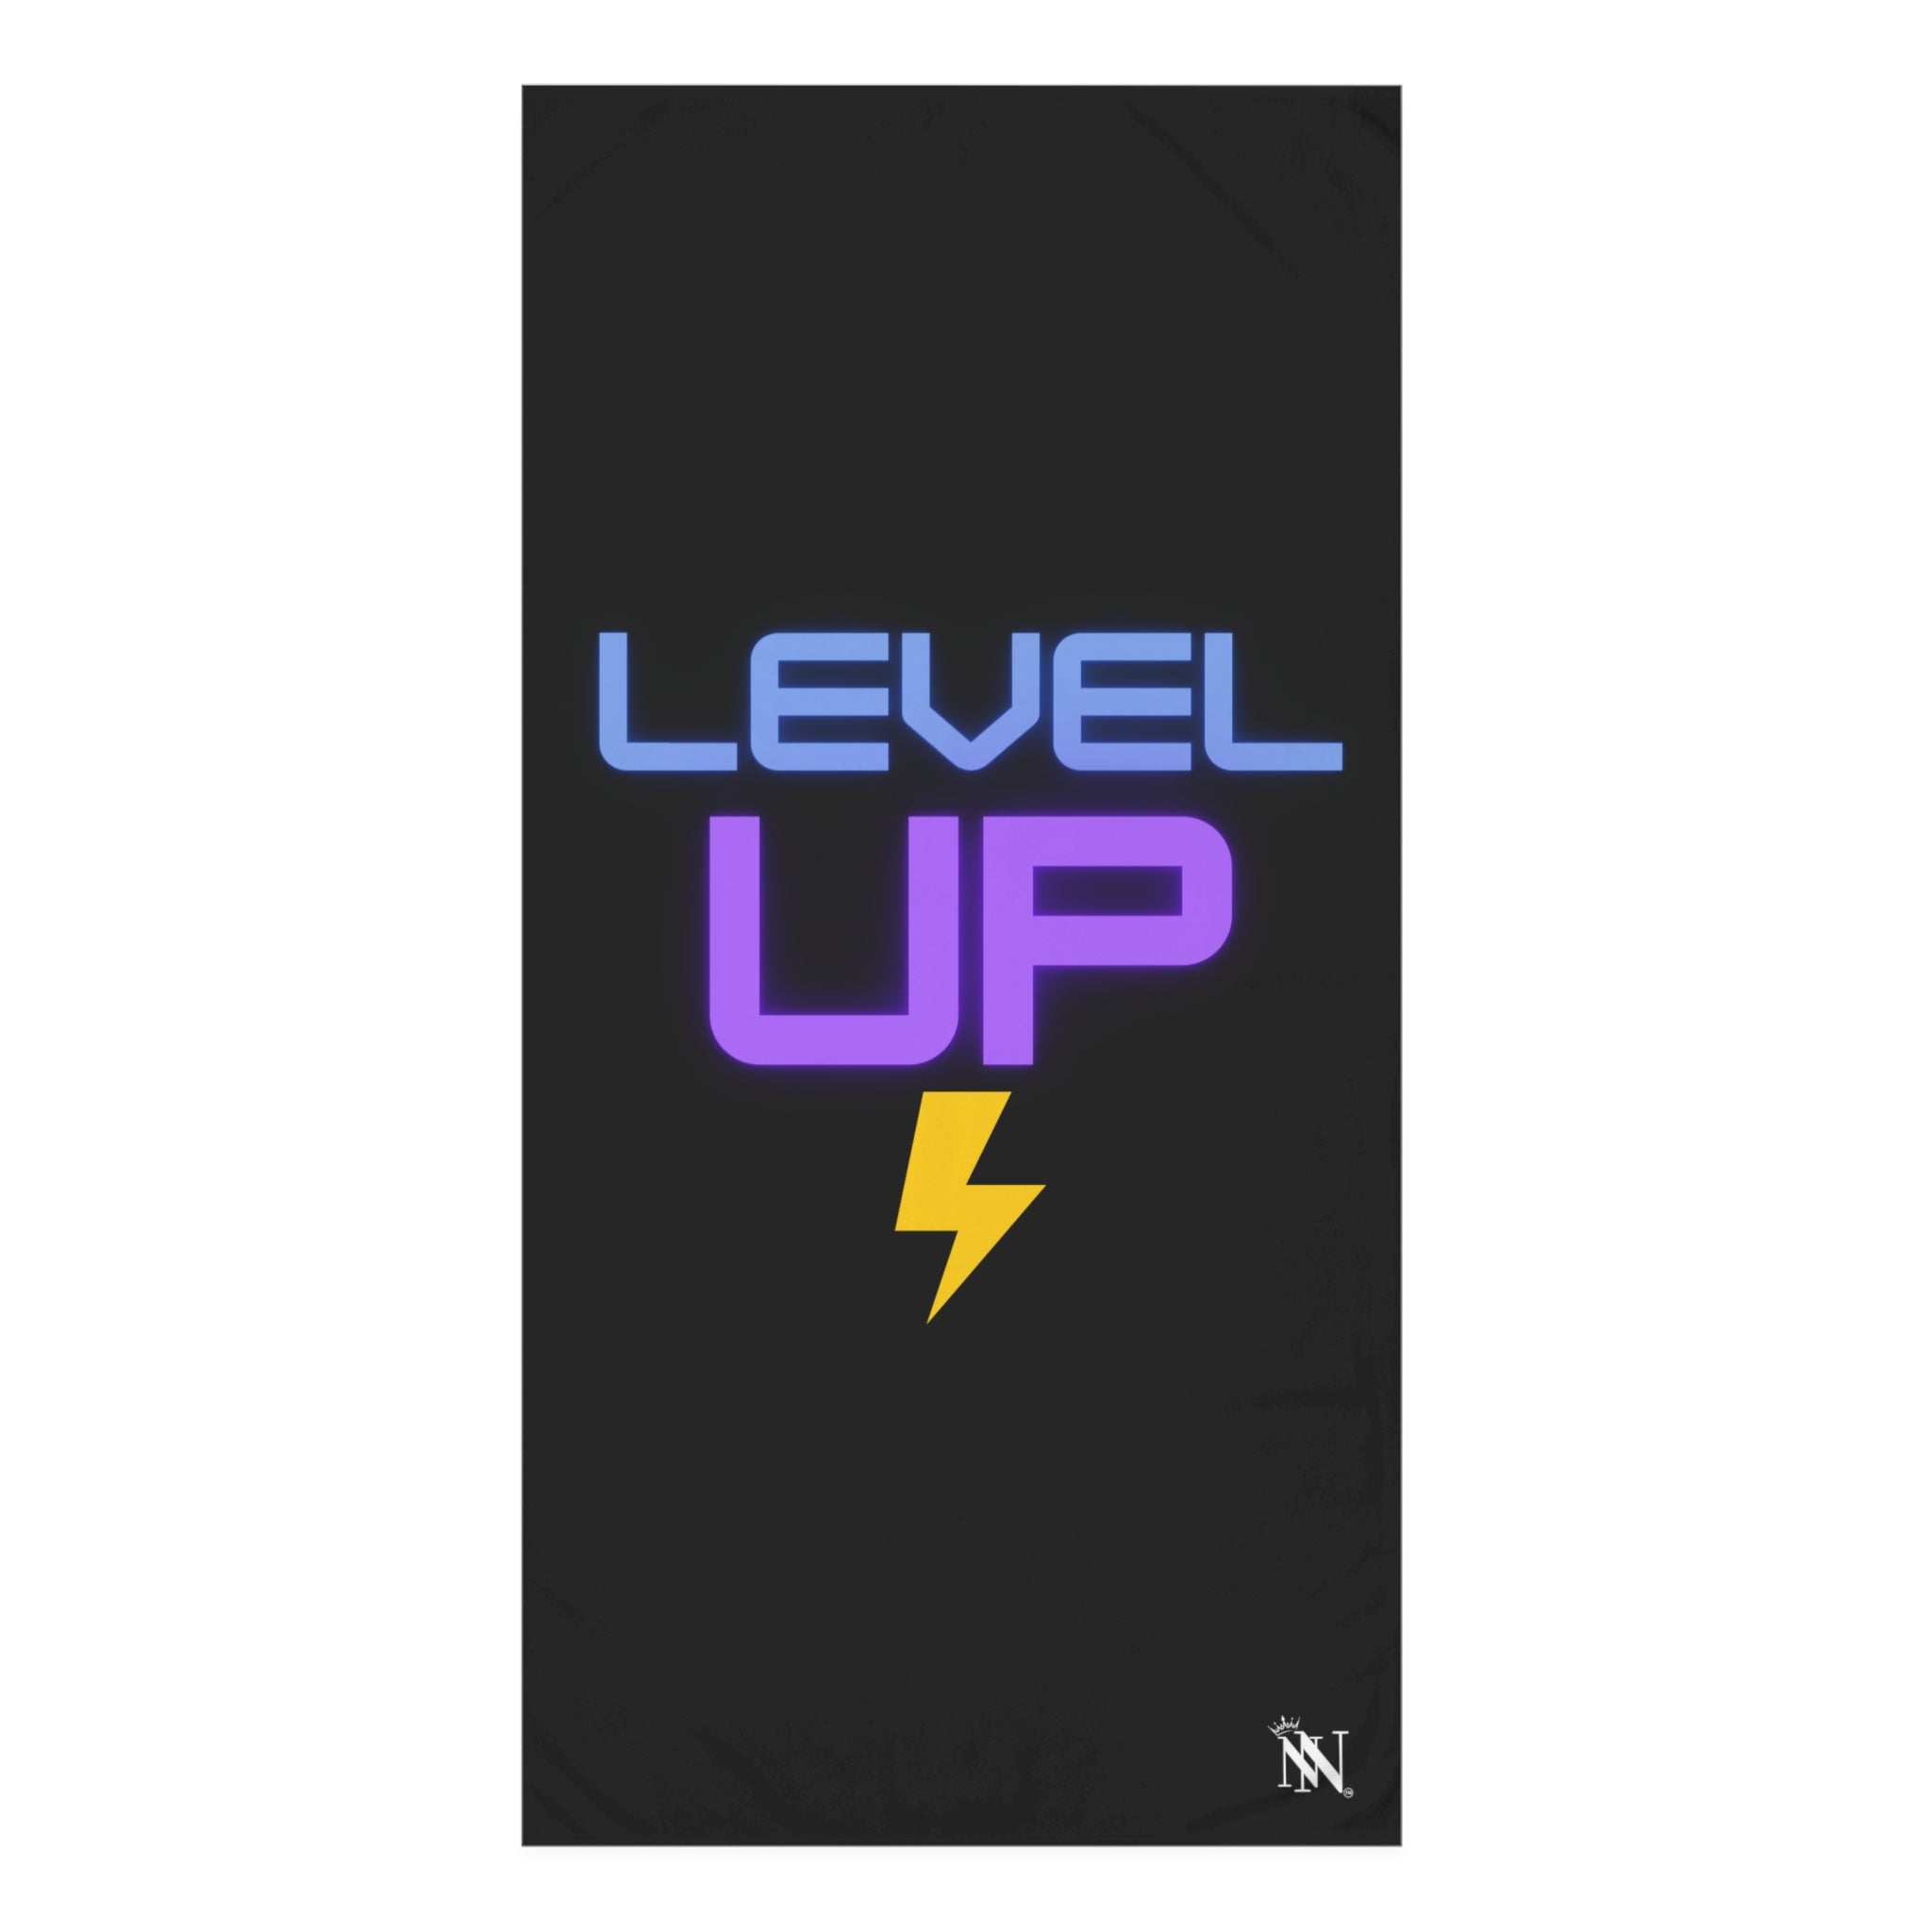 Level Up sex Towel